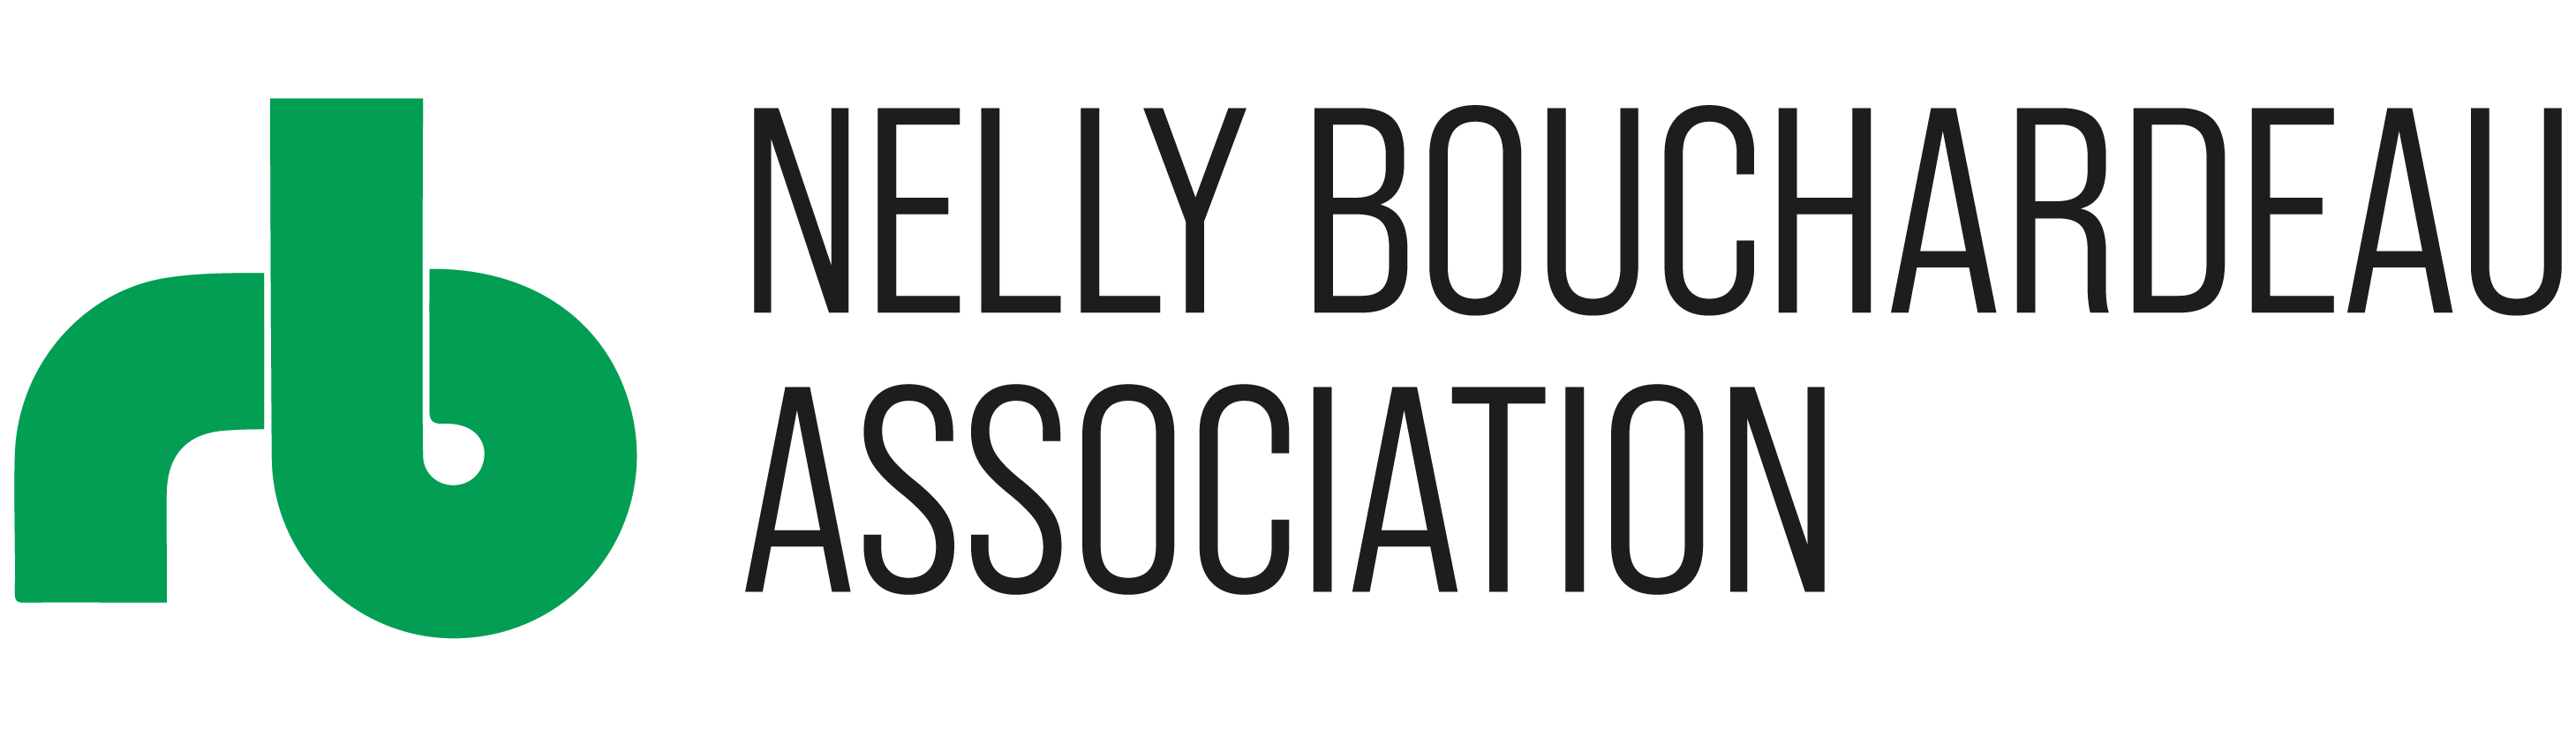 Nelly Bouchardeau Association